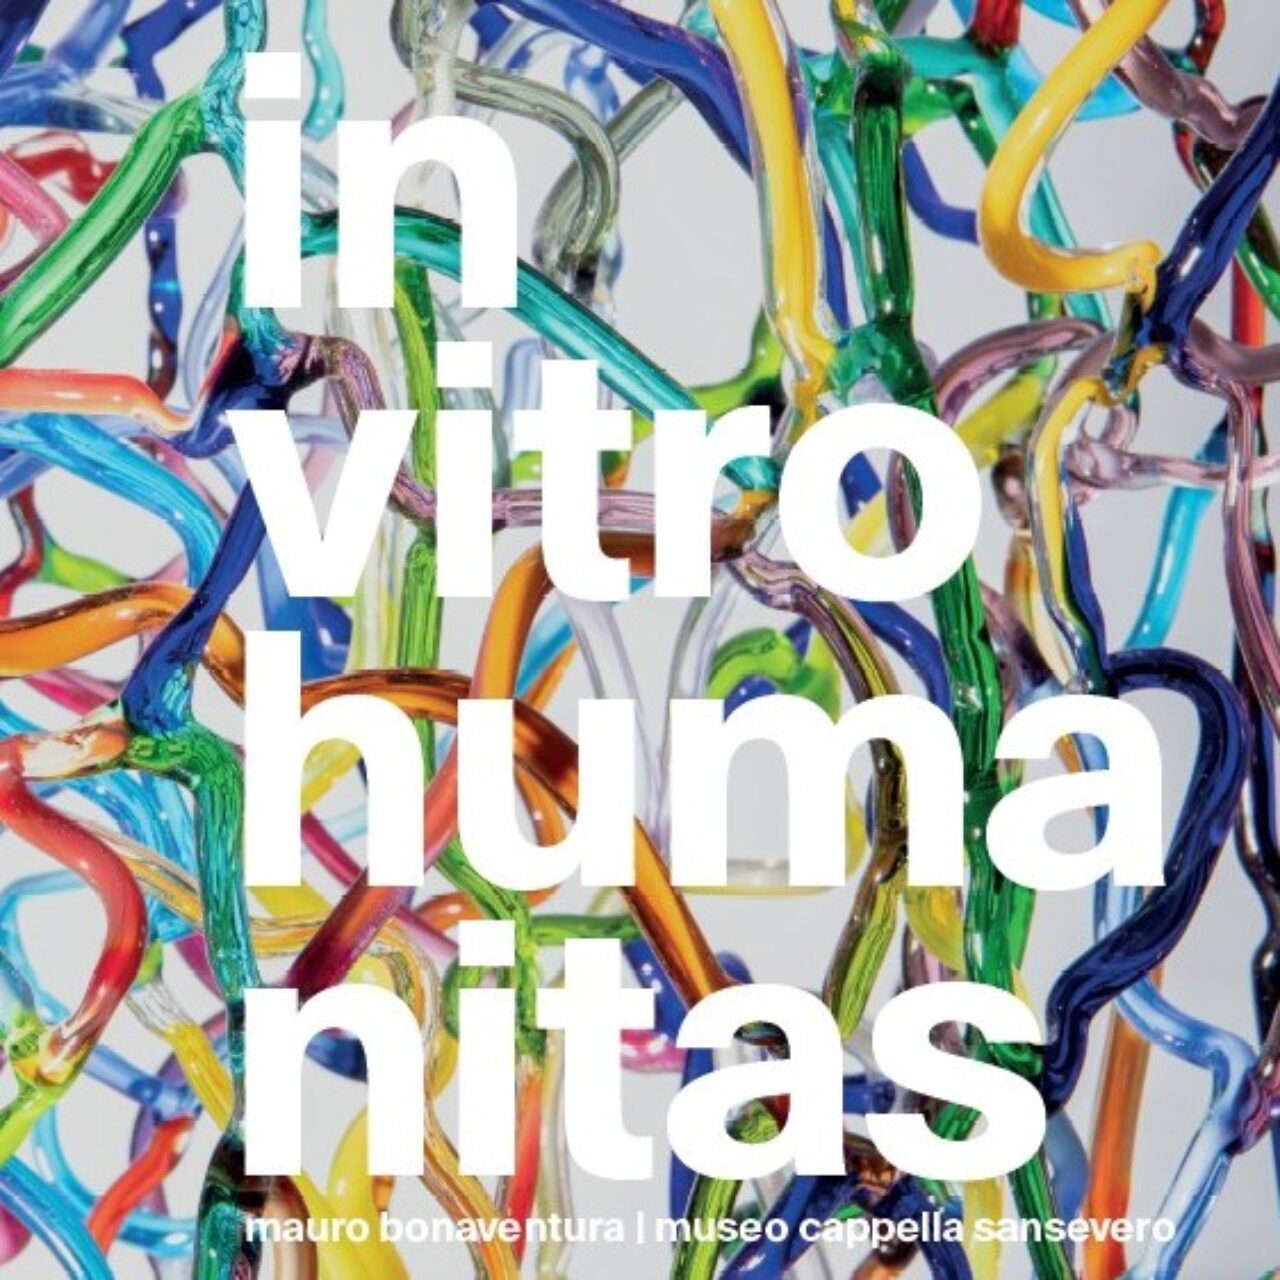 in vitro humanitas